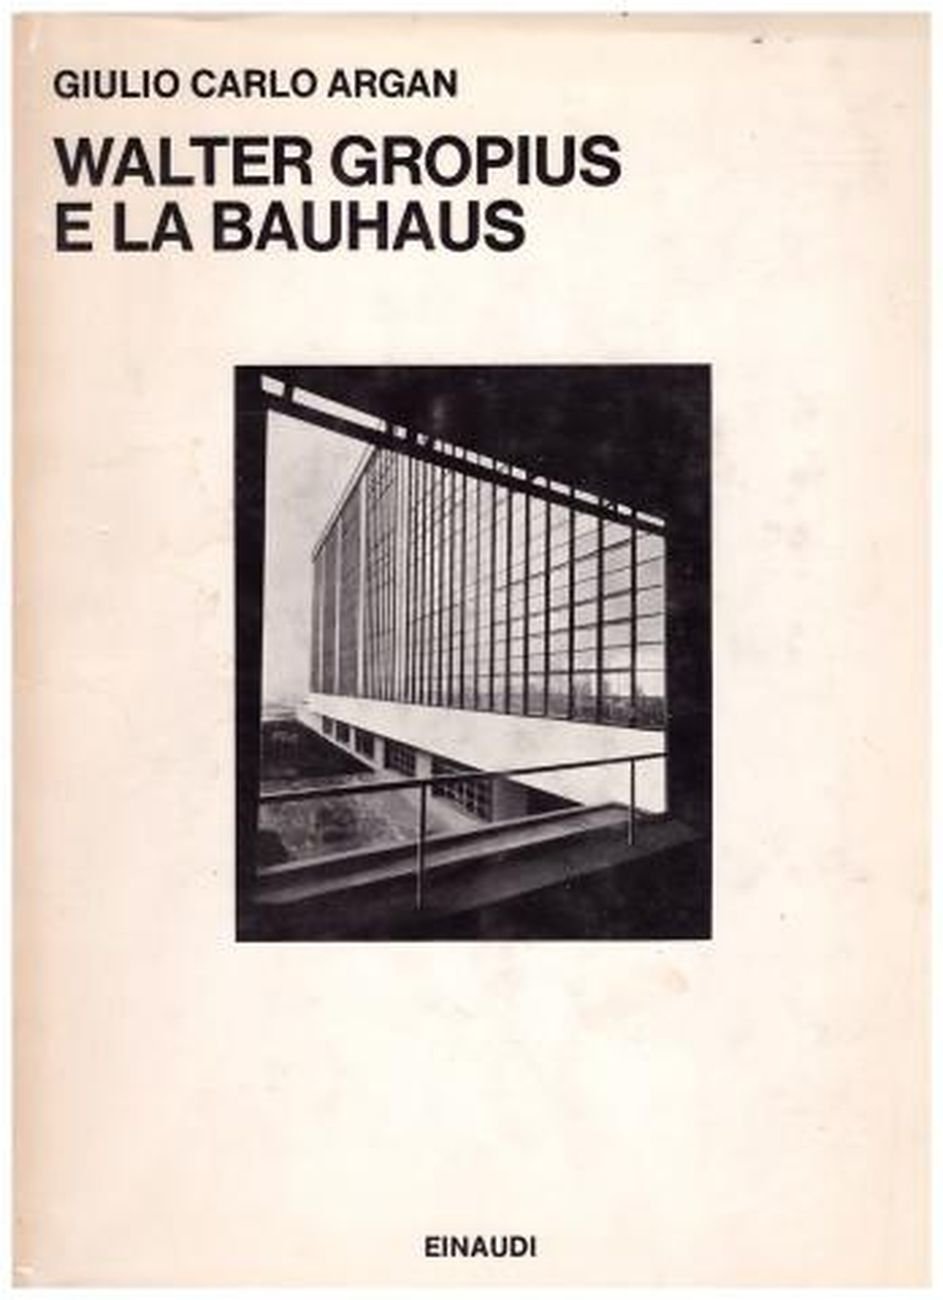 Giulio Carlo Argan – Walter Gropius e la Bauhaus (Einaudi, 1951)